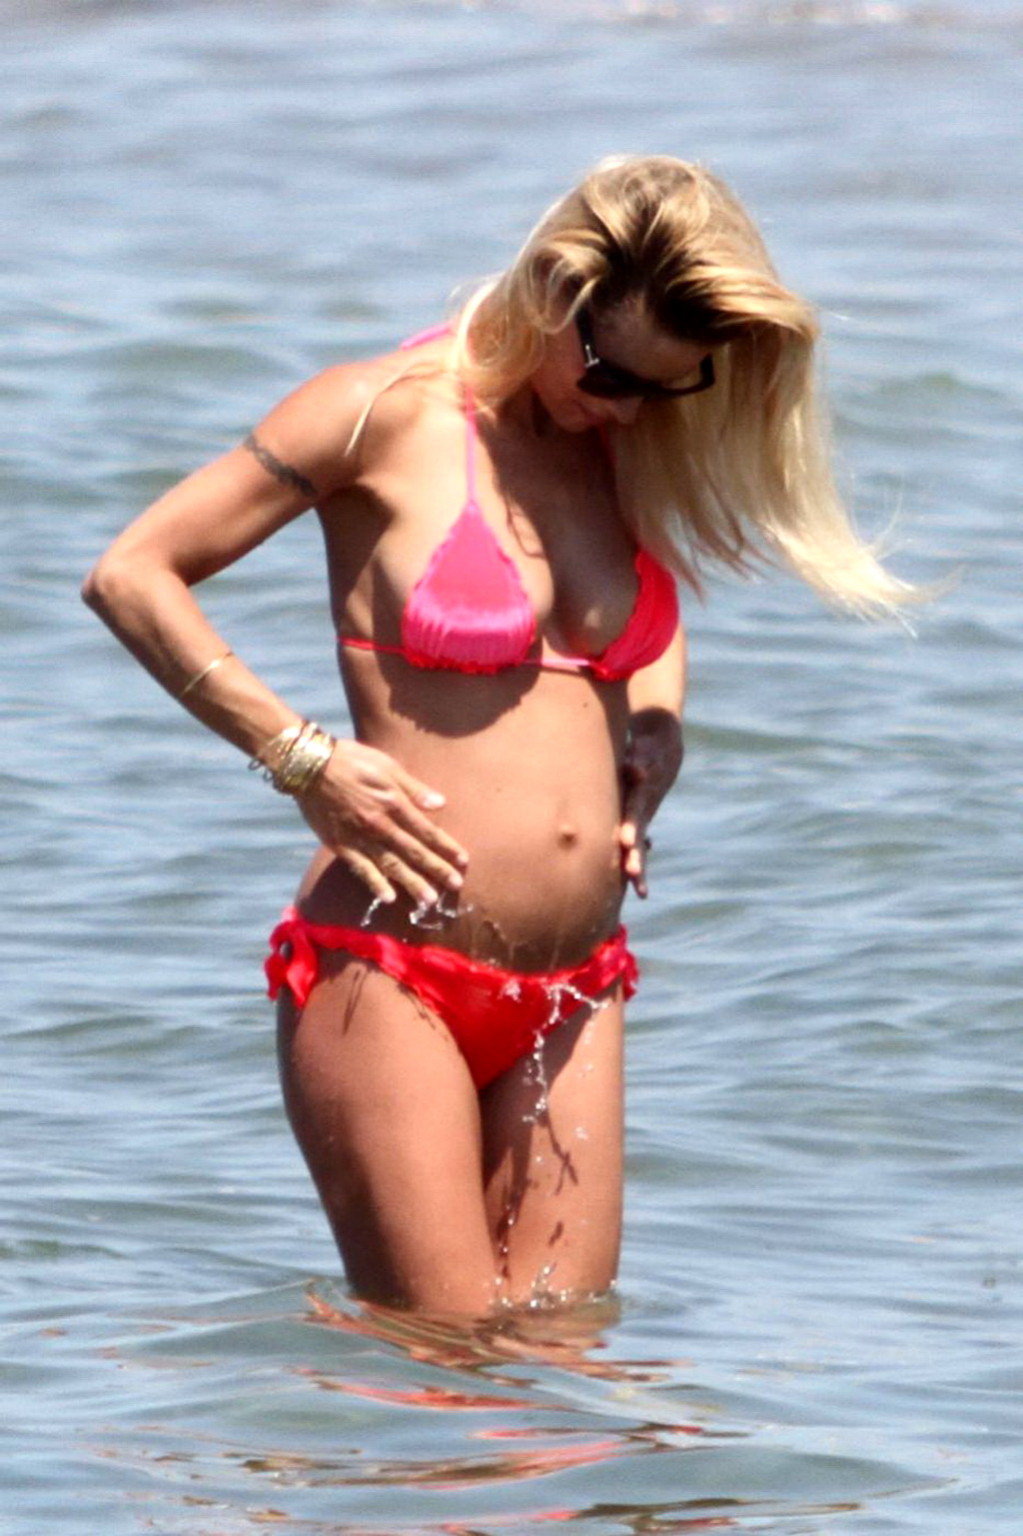 Michelle hunziker embarazada con un bikini en la playa de forte dei marmi, ita
 #75227895